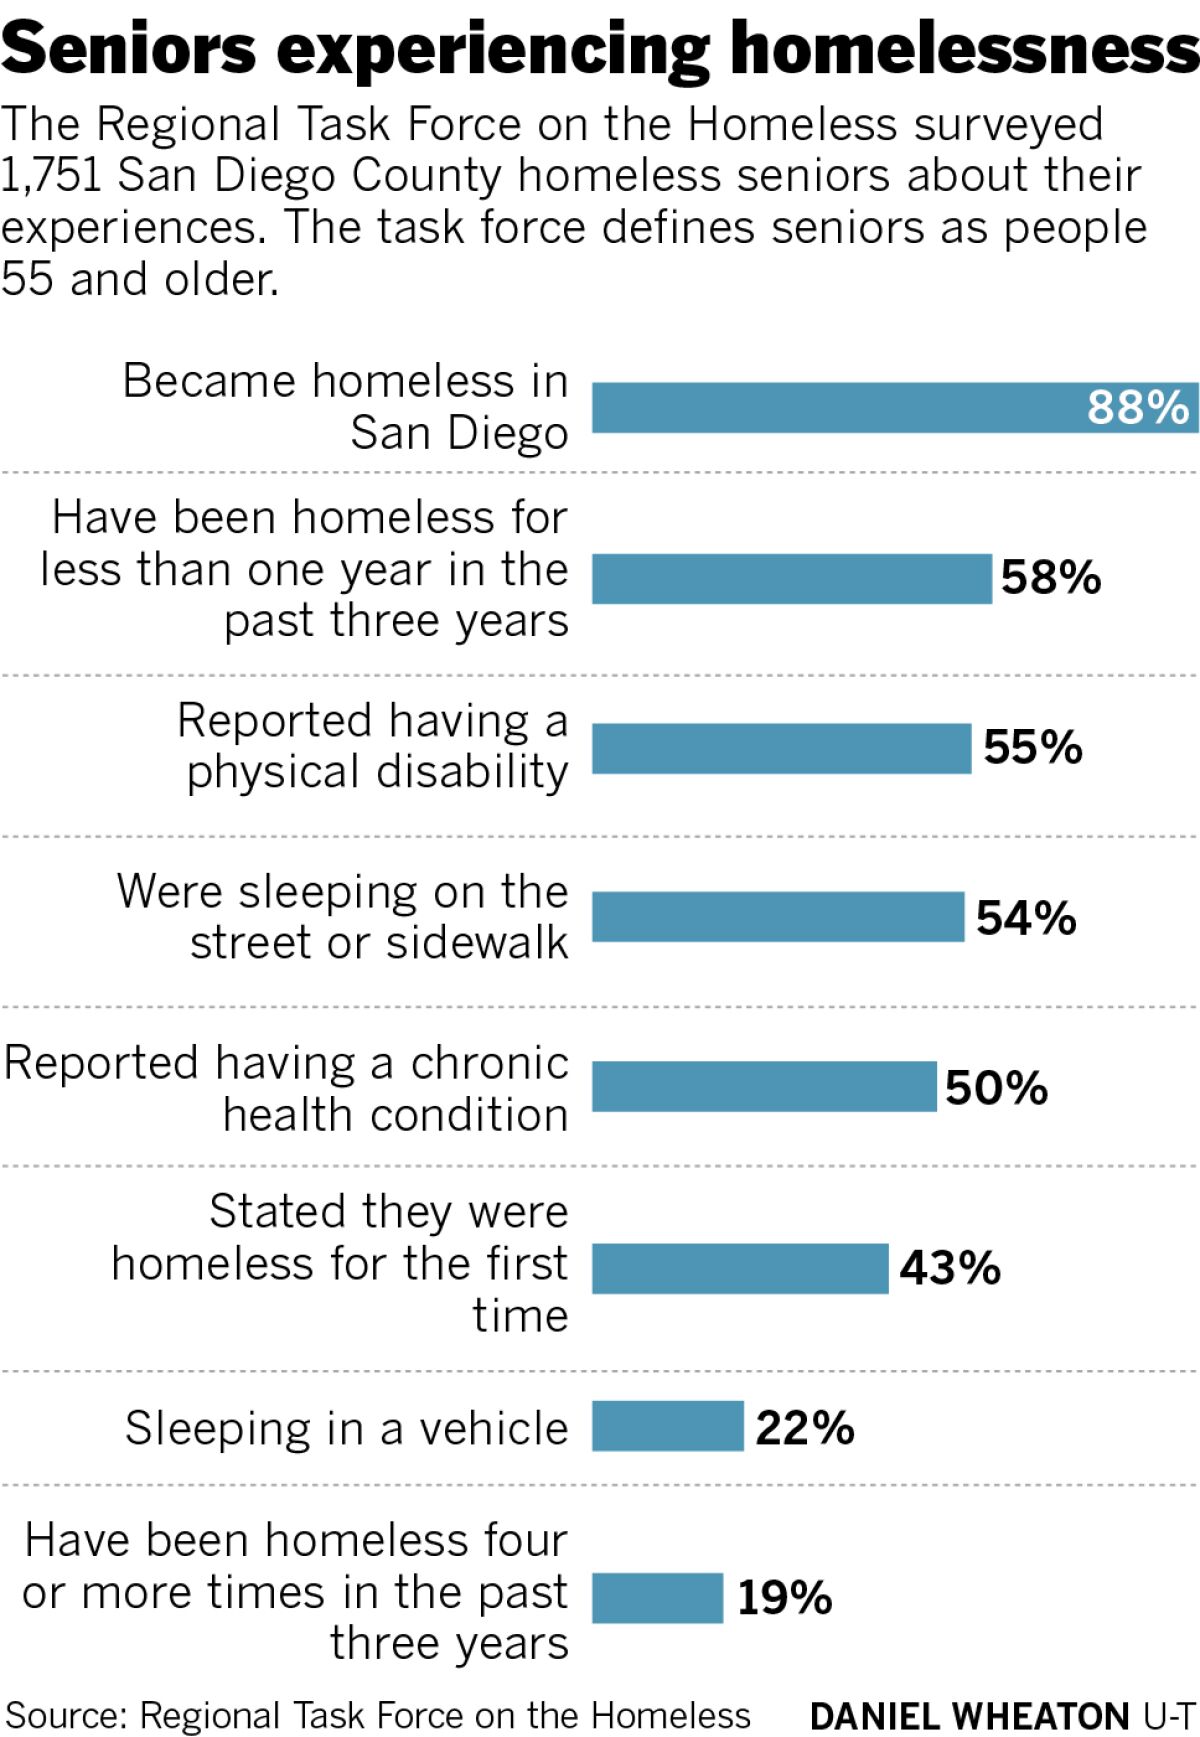 Seniors experiencing homelessness